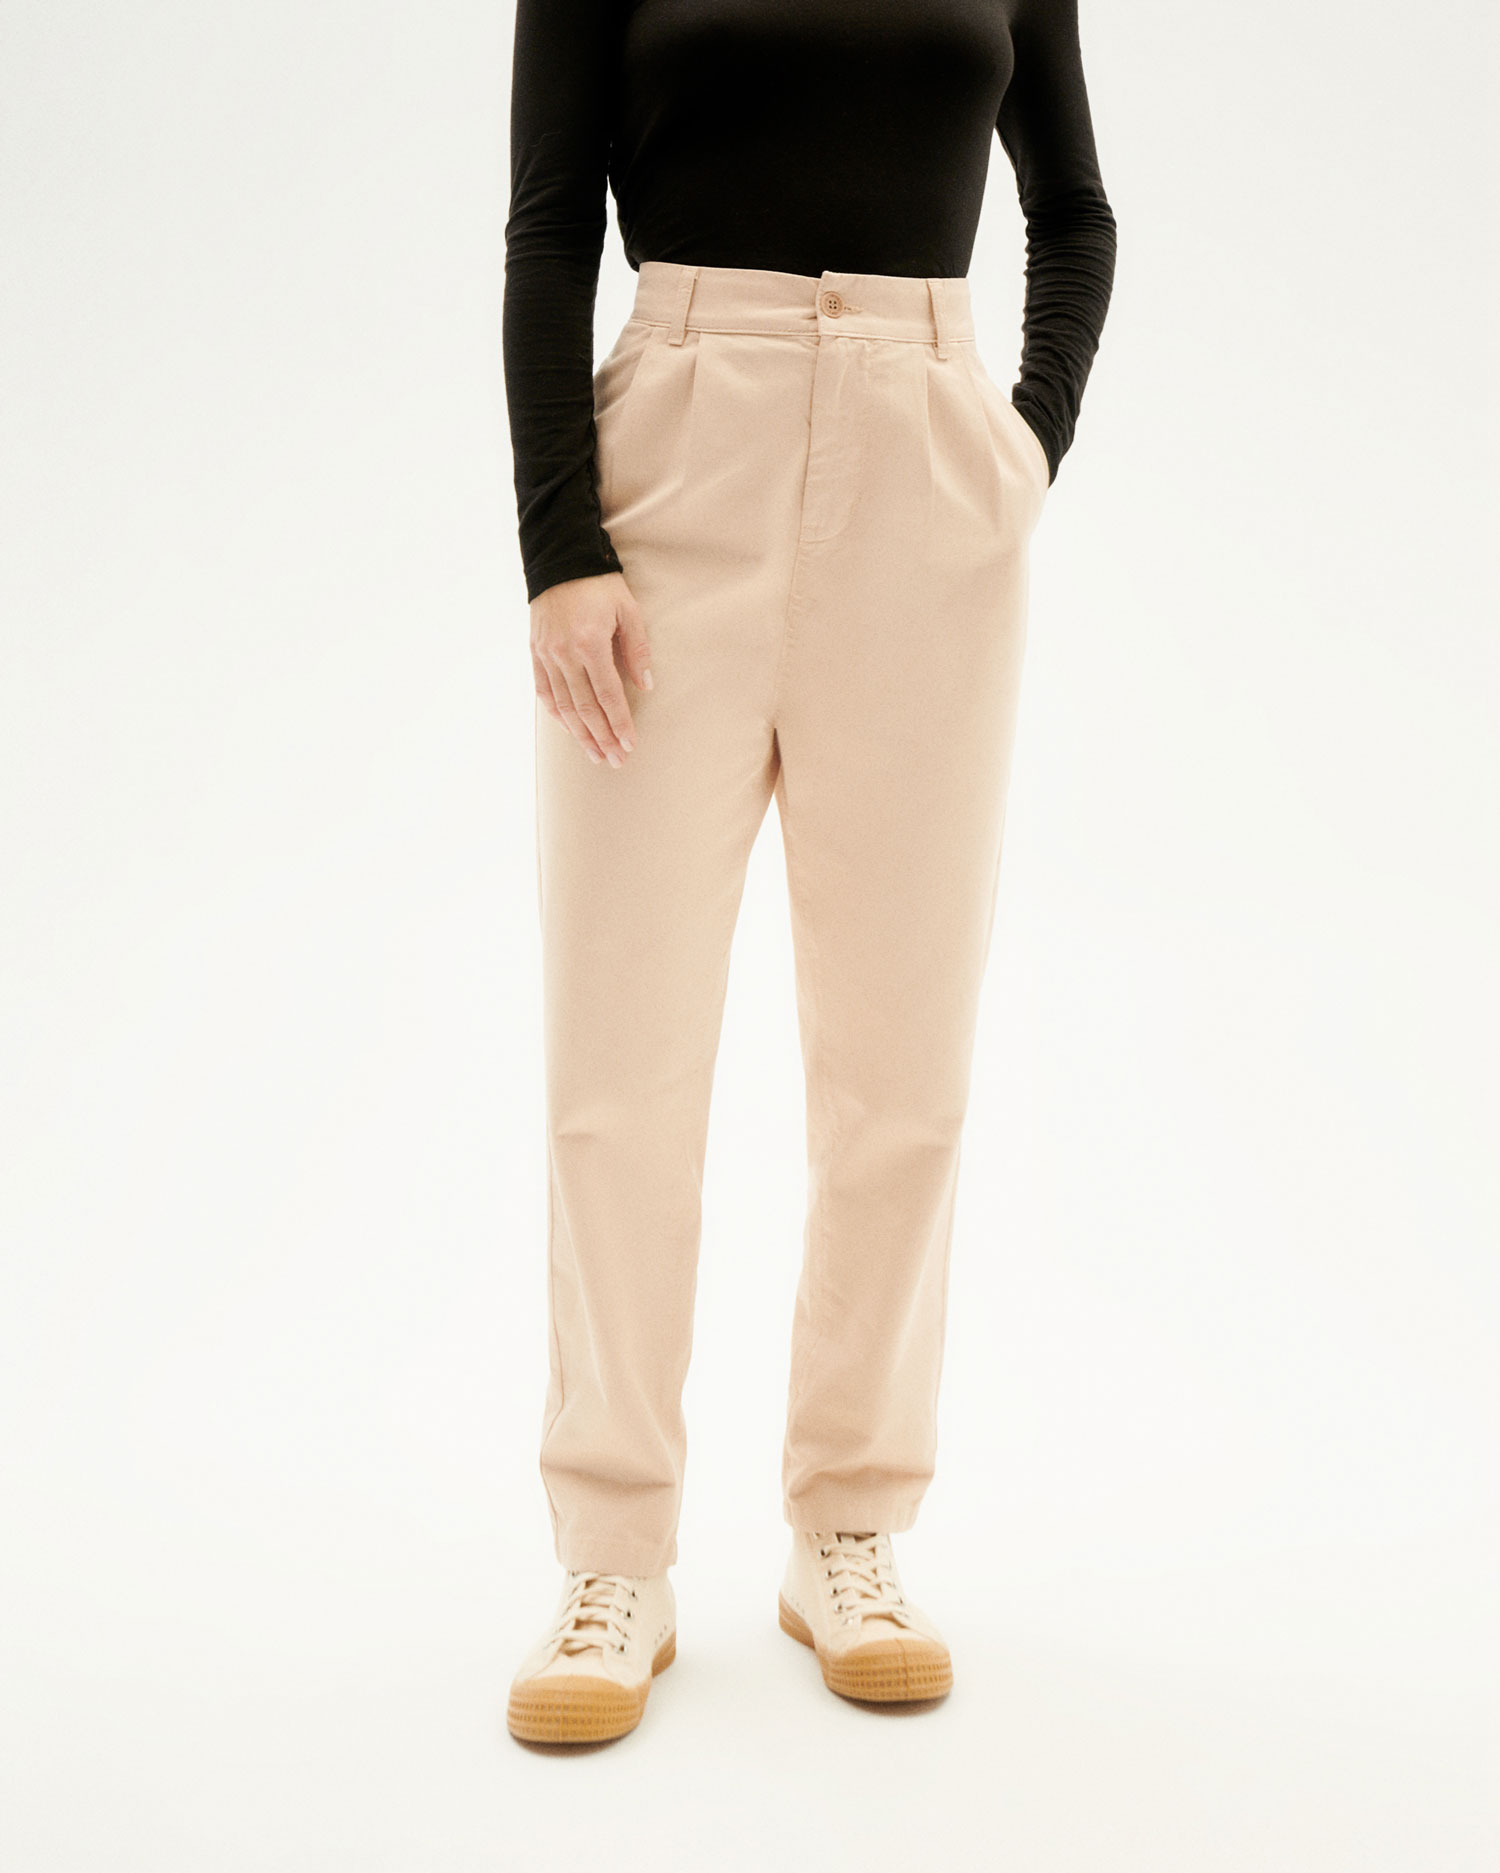 Pantalon Rina - beige - coton biologique - Thinking Mu 01